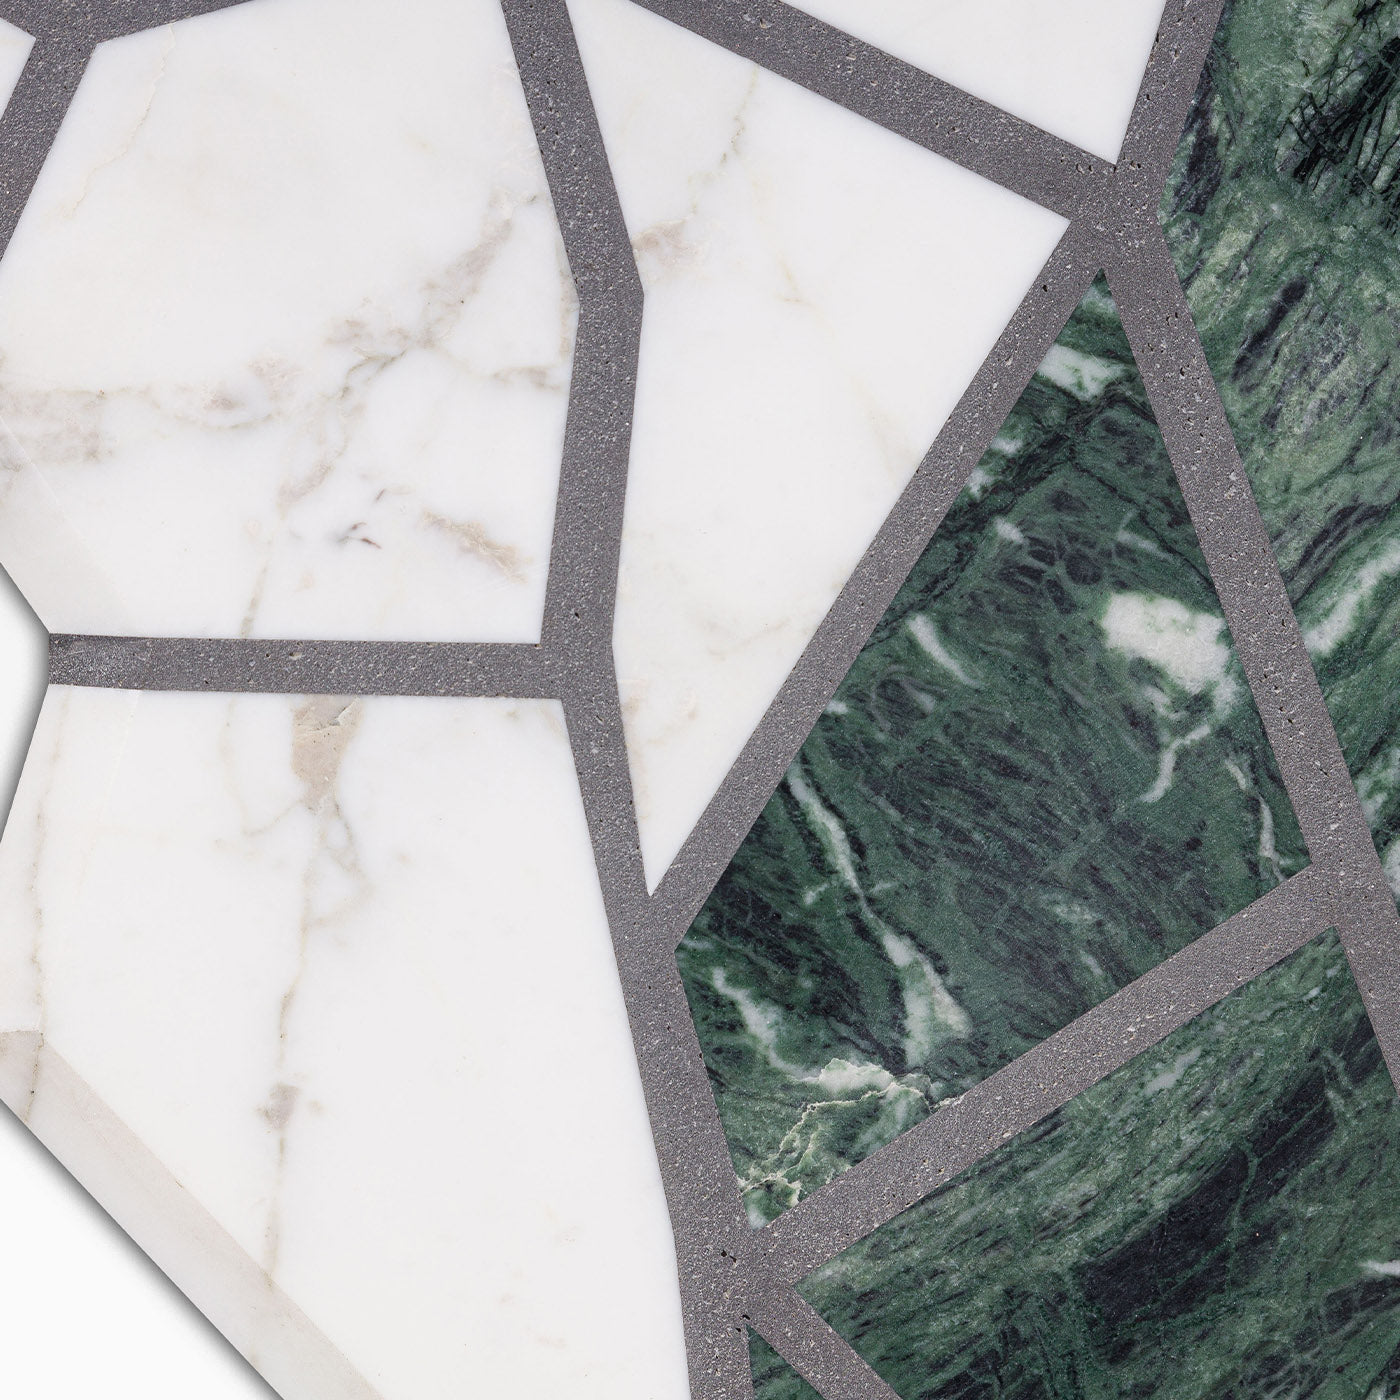 Vague Asymmetrical Marble Rug by Zanellato-Bortotto Studio - Alternative view 2